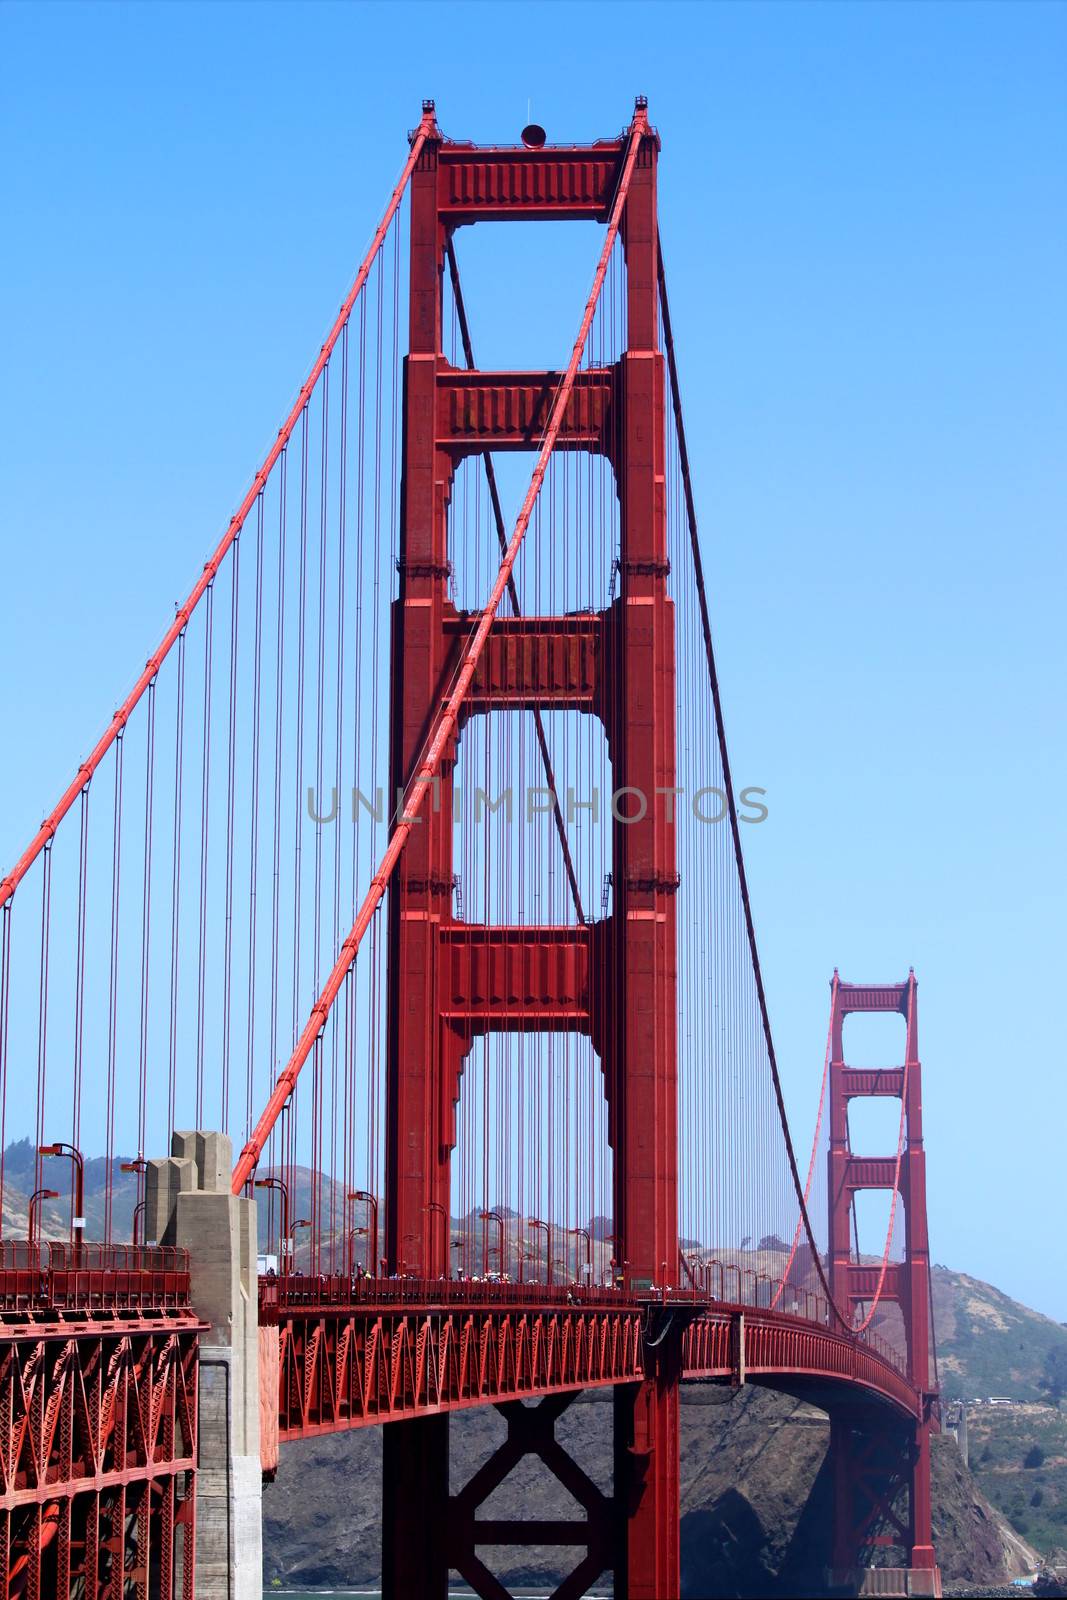 The Golden Gate bridge in San Francisco California.